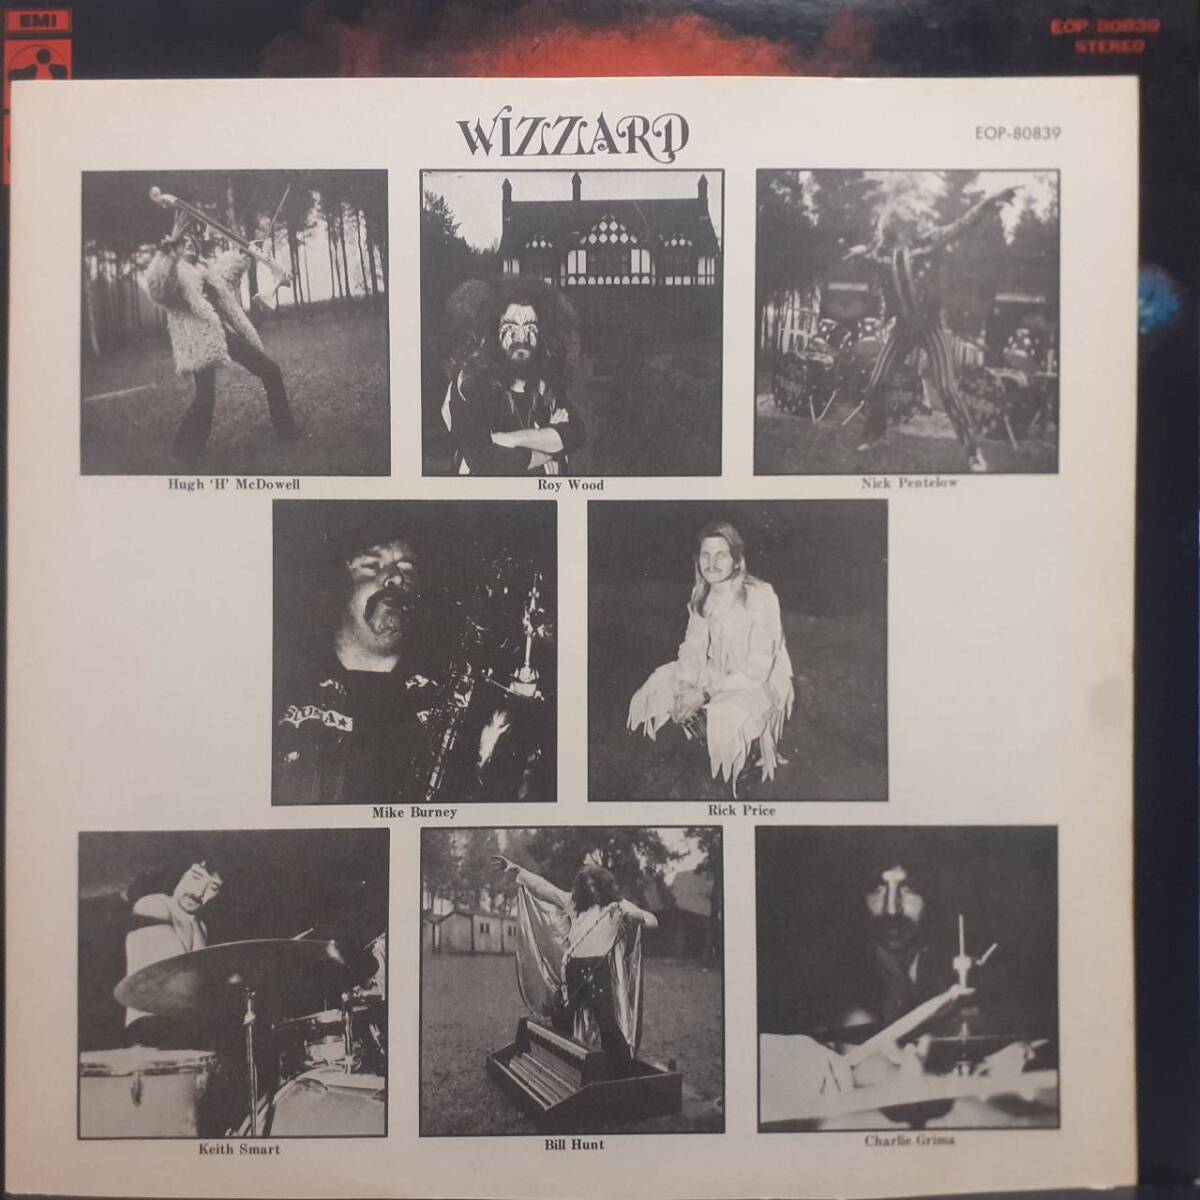 PROMO日本HARVEST(ODEON)盤LP 見本盤 白ラベル Wizzard (Roy Wood) / Wizzard Brew 1973年 EOP-80839 ウィザードの魔力 ELO MOVE プロモ_画像4